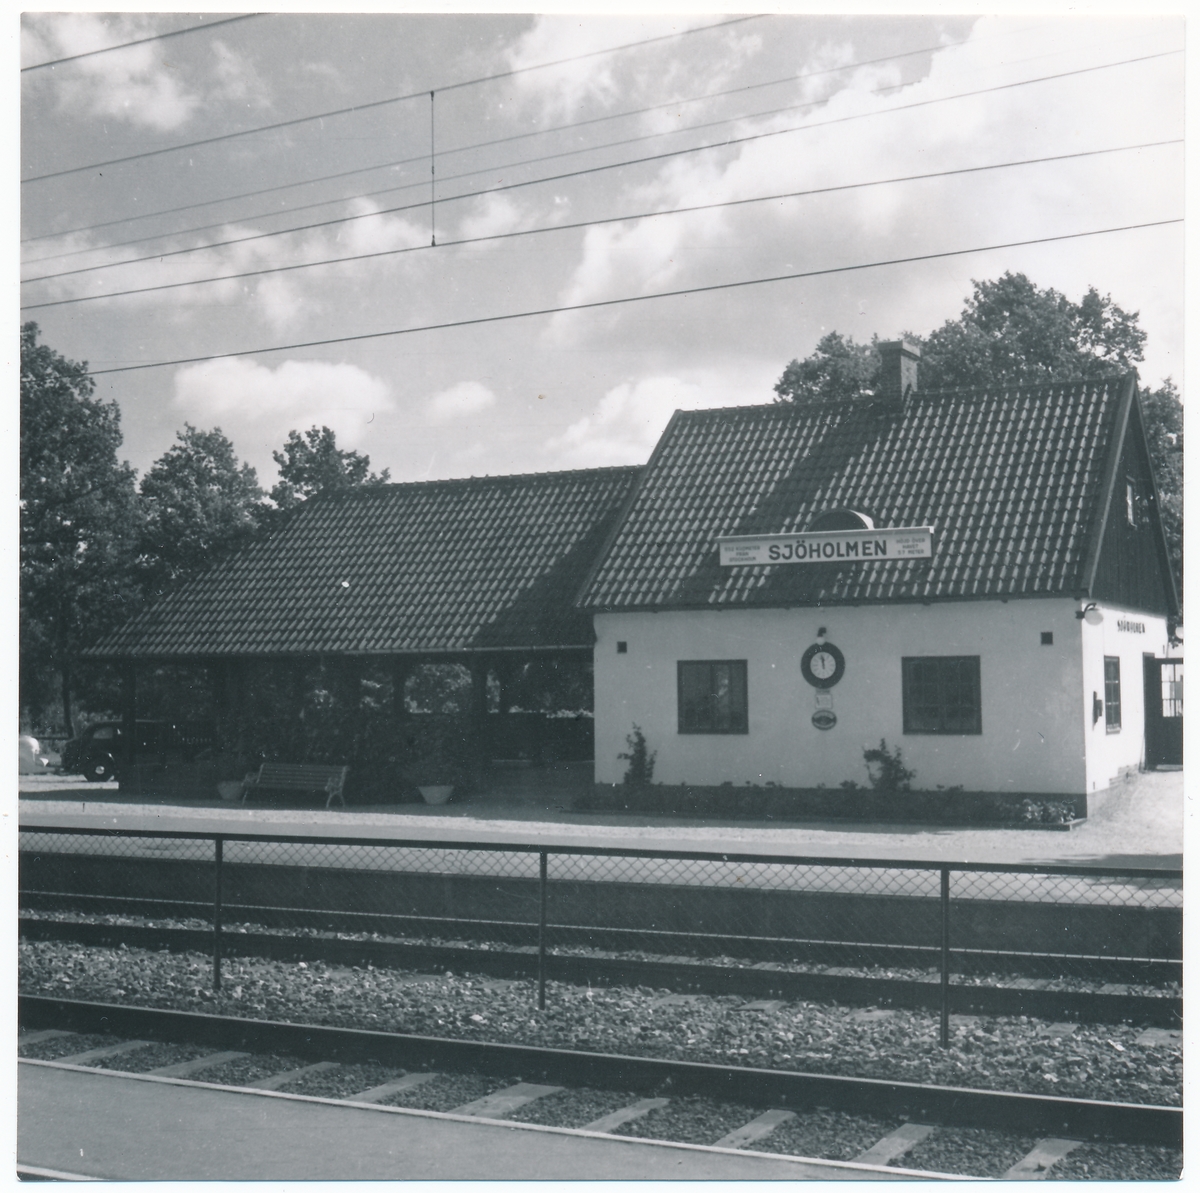 Sjöholmens station